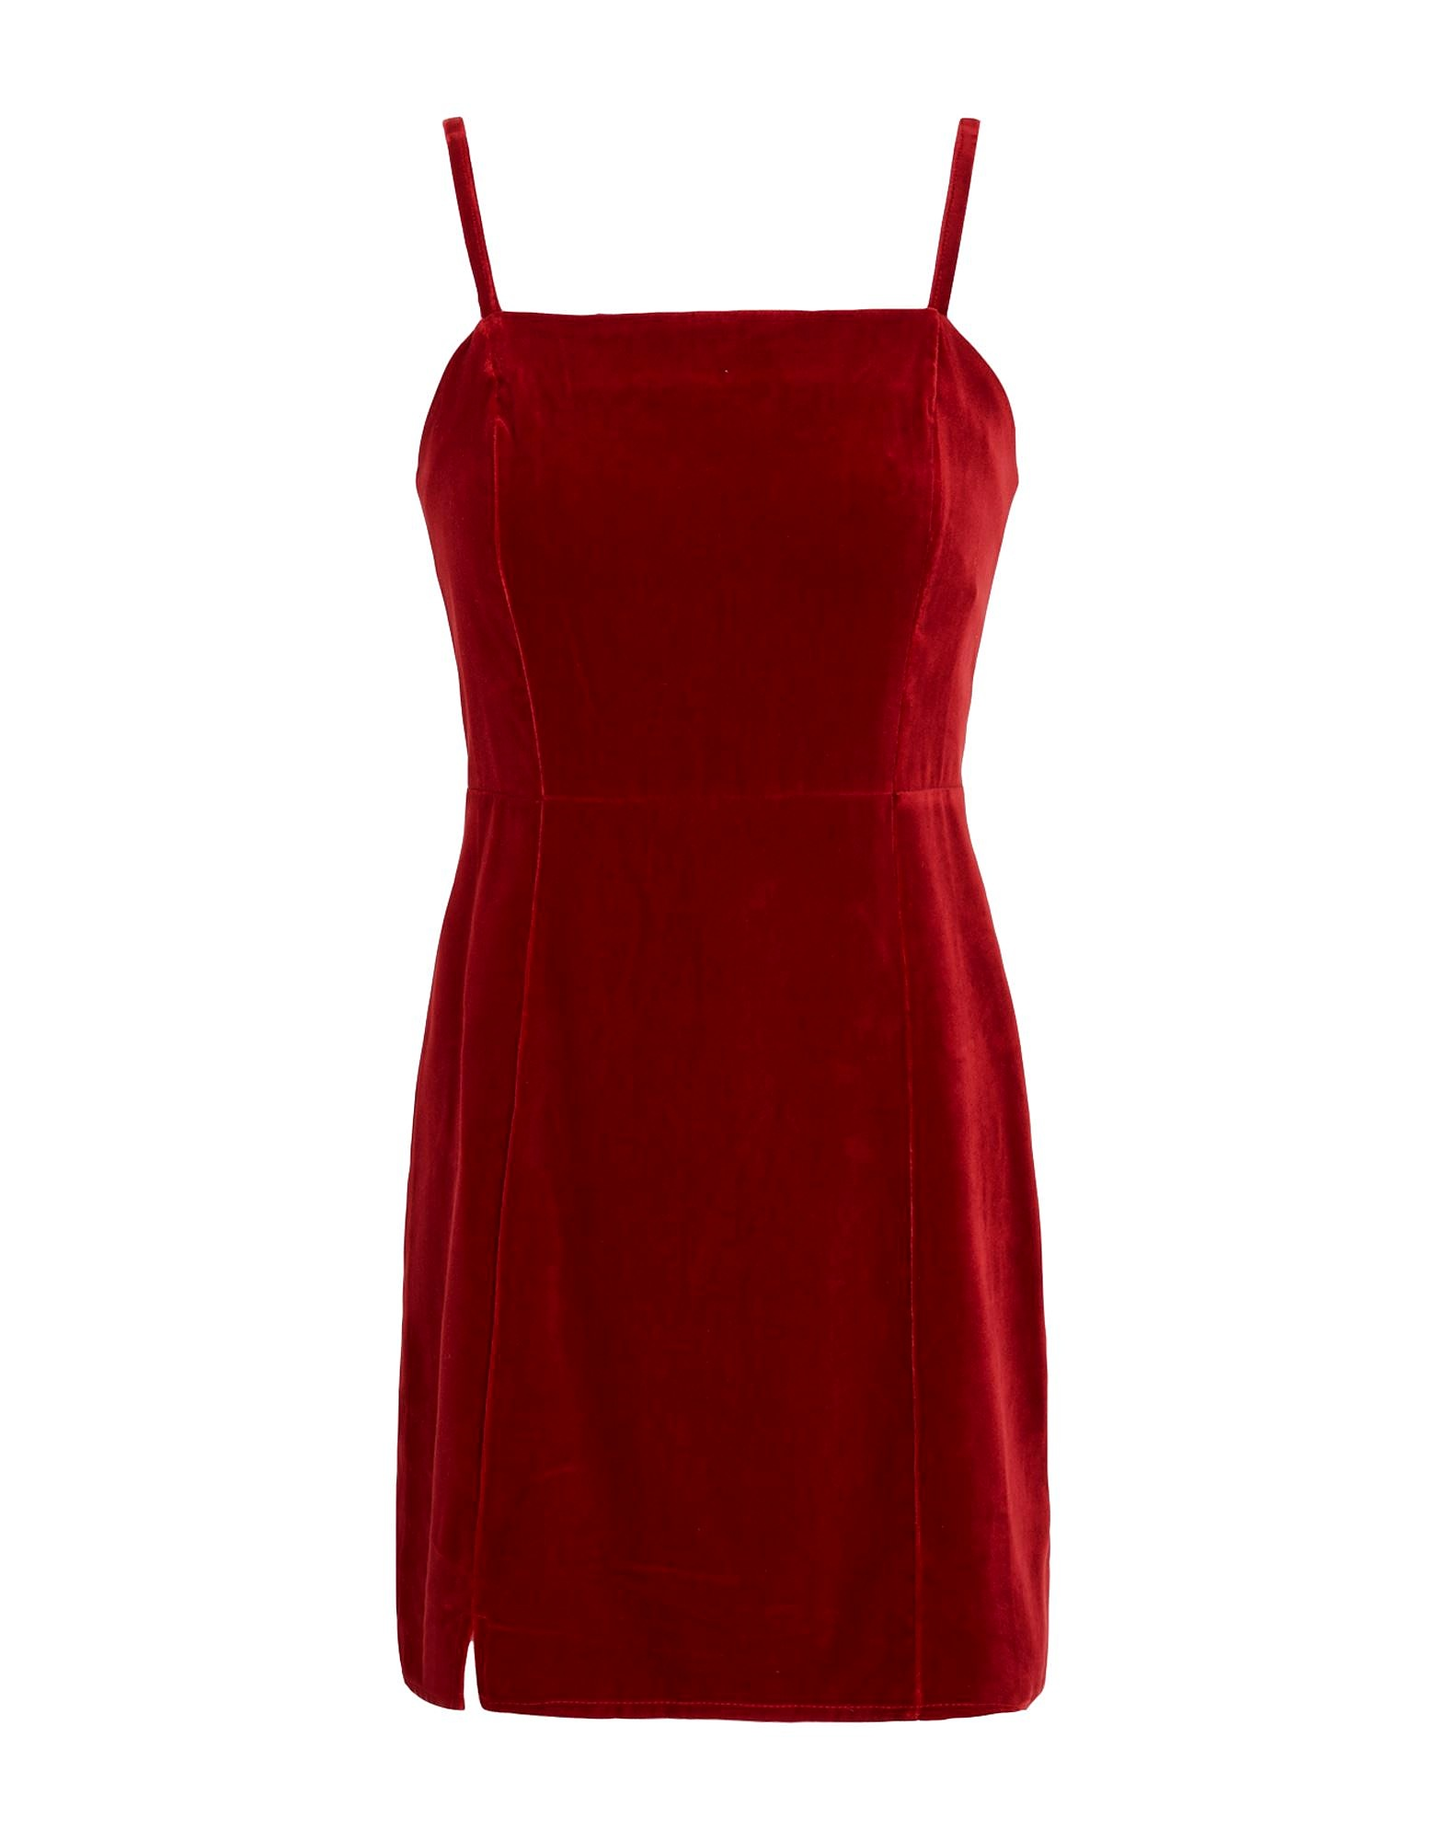 PARIOLI DRESSES - Parioli Velvet Mini Dresses - Red